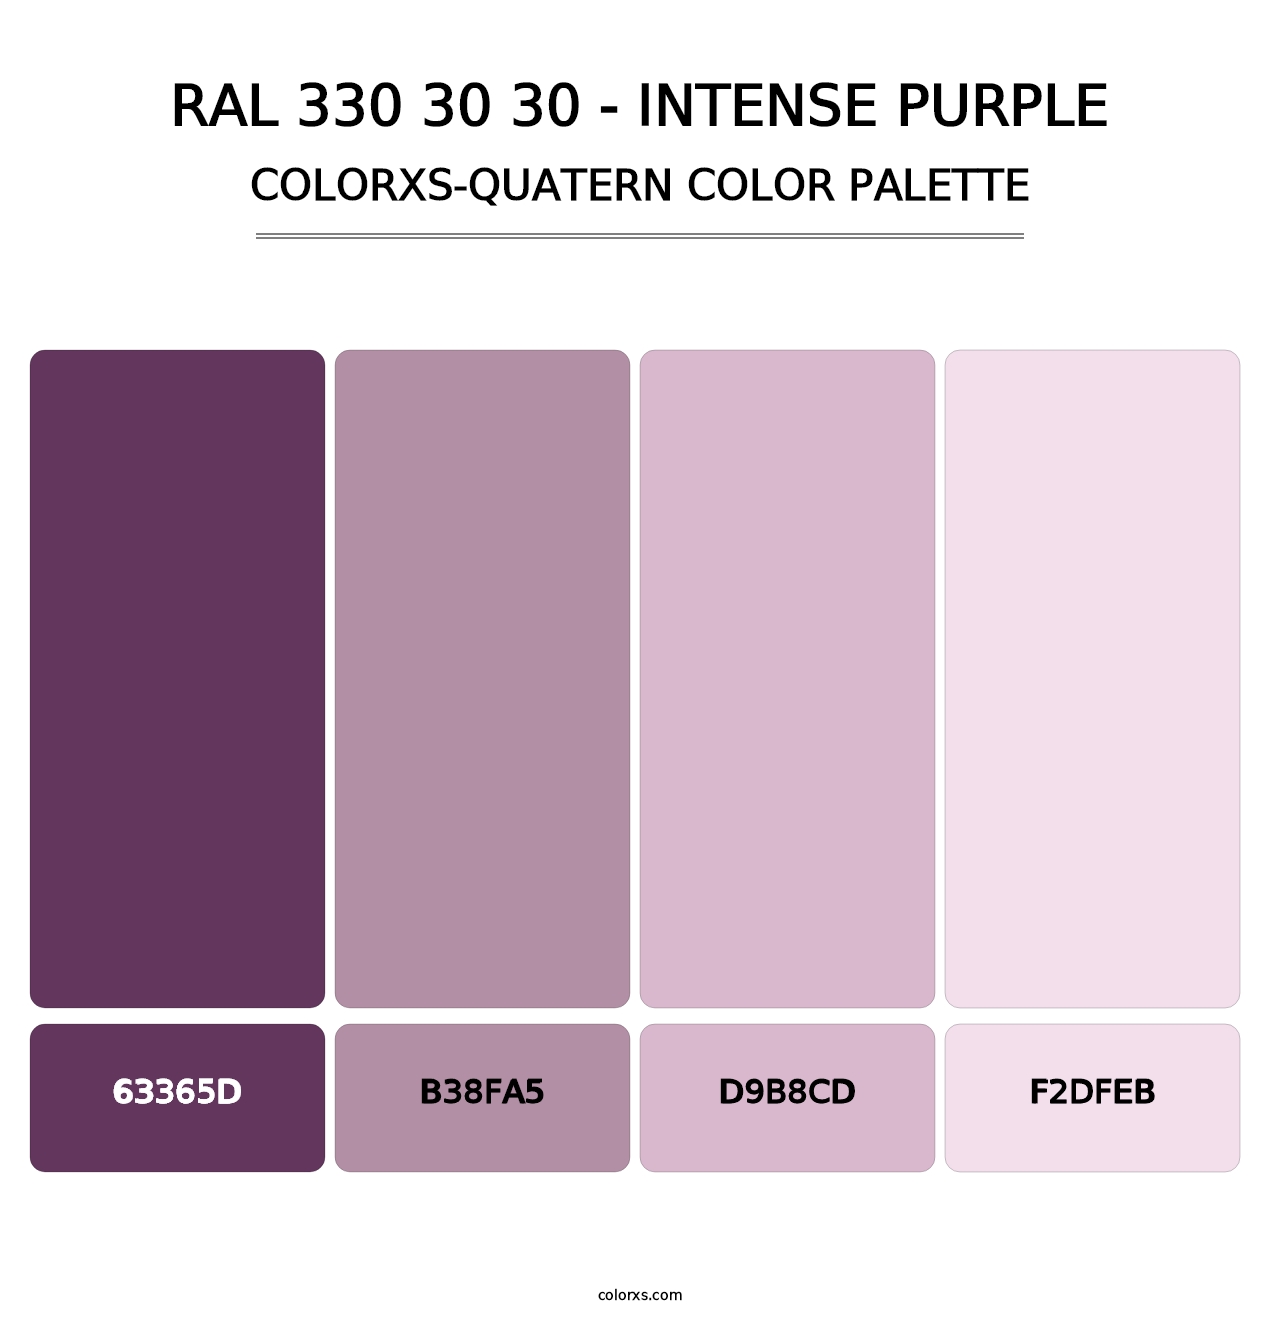 RAL 330 30 30 - Intense Purple - Colorxs Quatern Palette